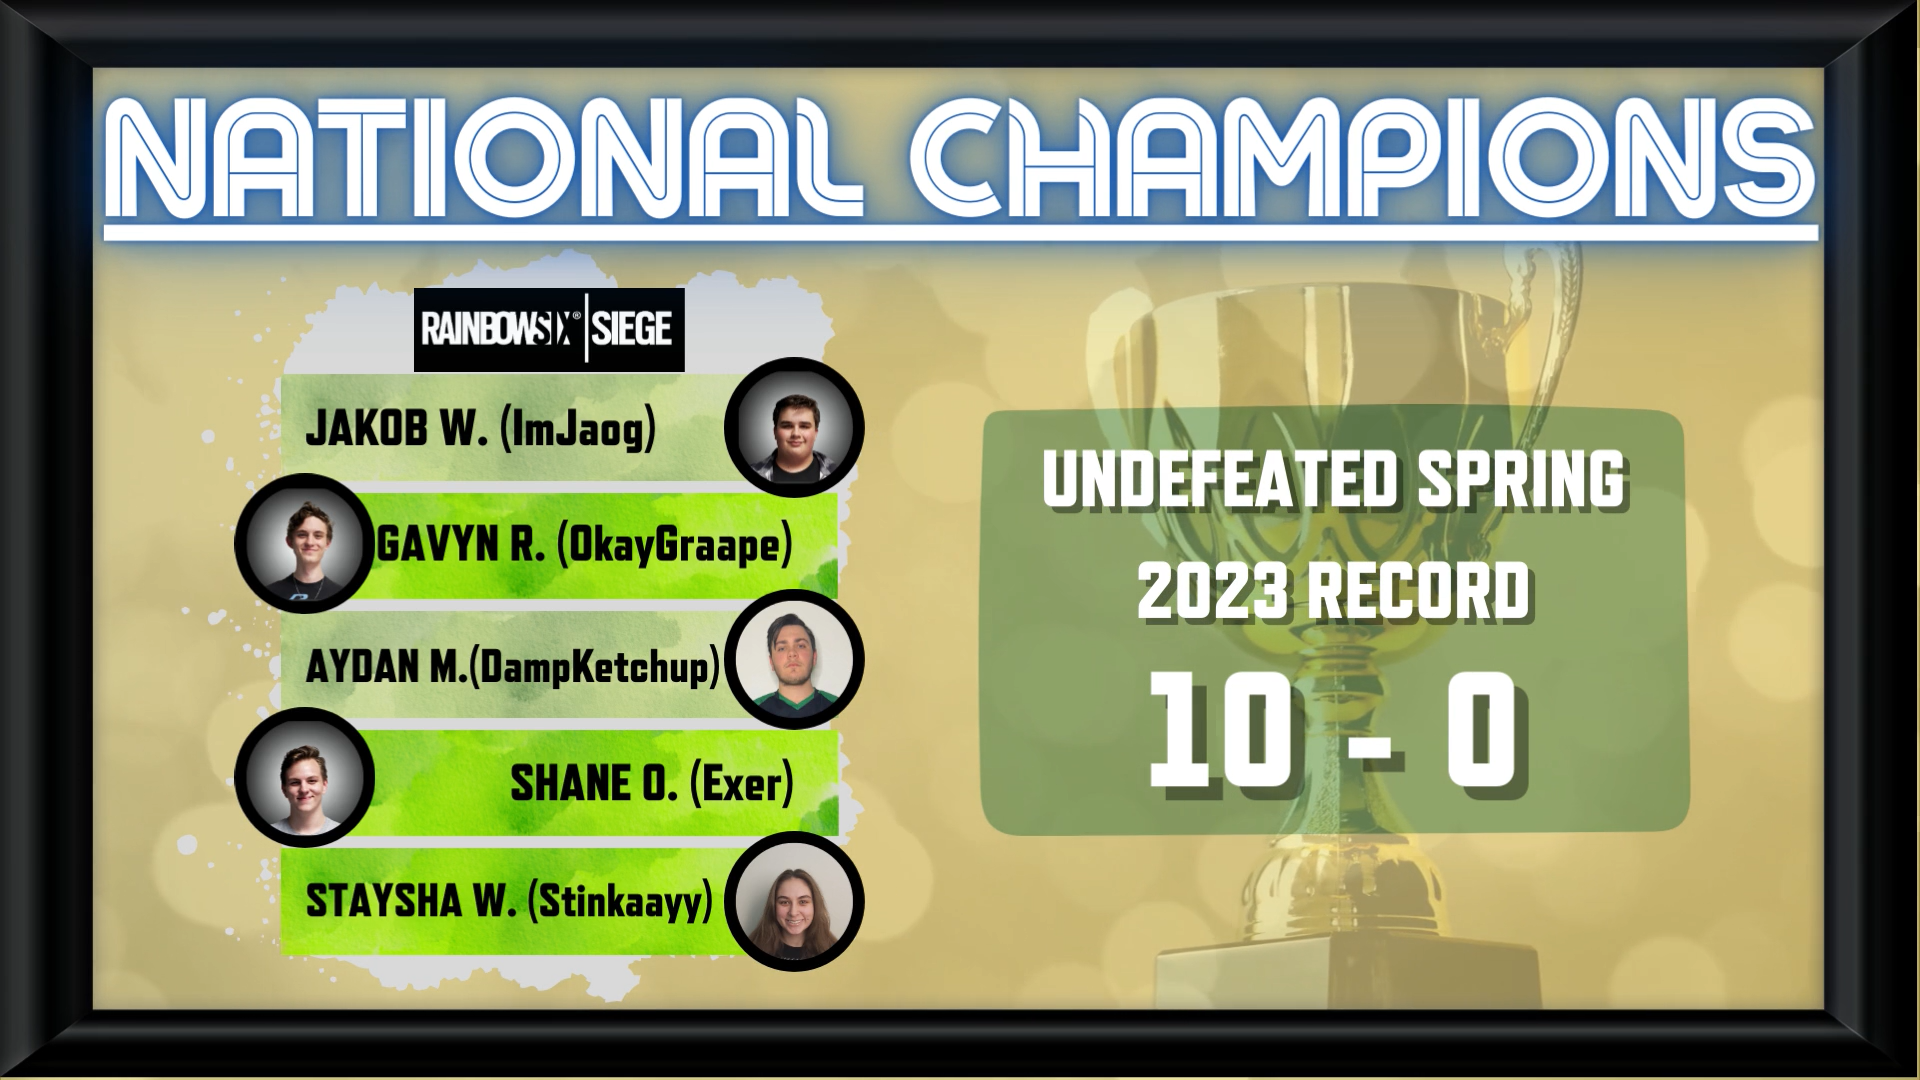 National Championship Team: Jakob W. (ImJaog), Gavyn R. (OkayGraape), Aydan MacLeod (DampKetchup), Shane O. (Exer), Staysha W. (Stinkaayy).
Undefeated Spring 2023 Record: 10-0